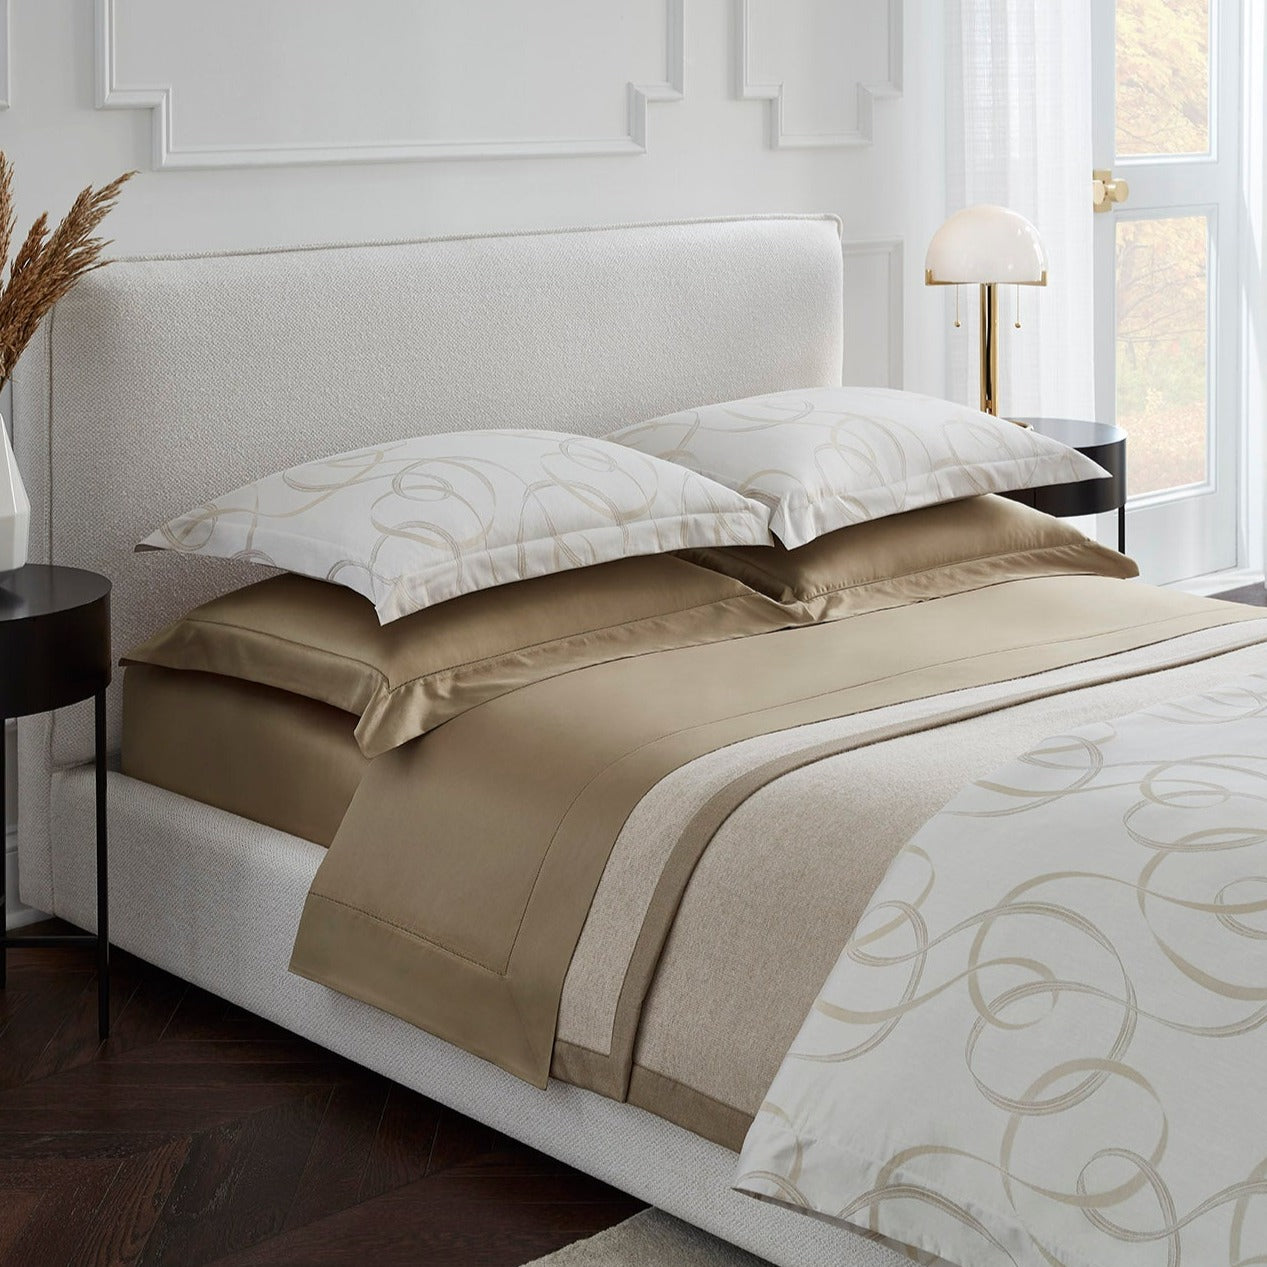 Caravino Bed Linens